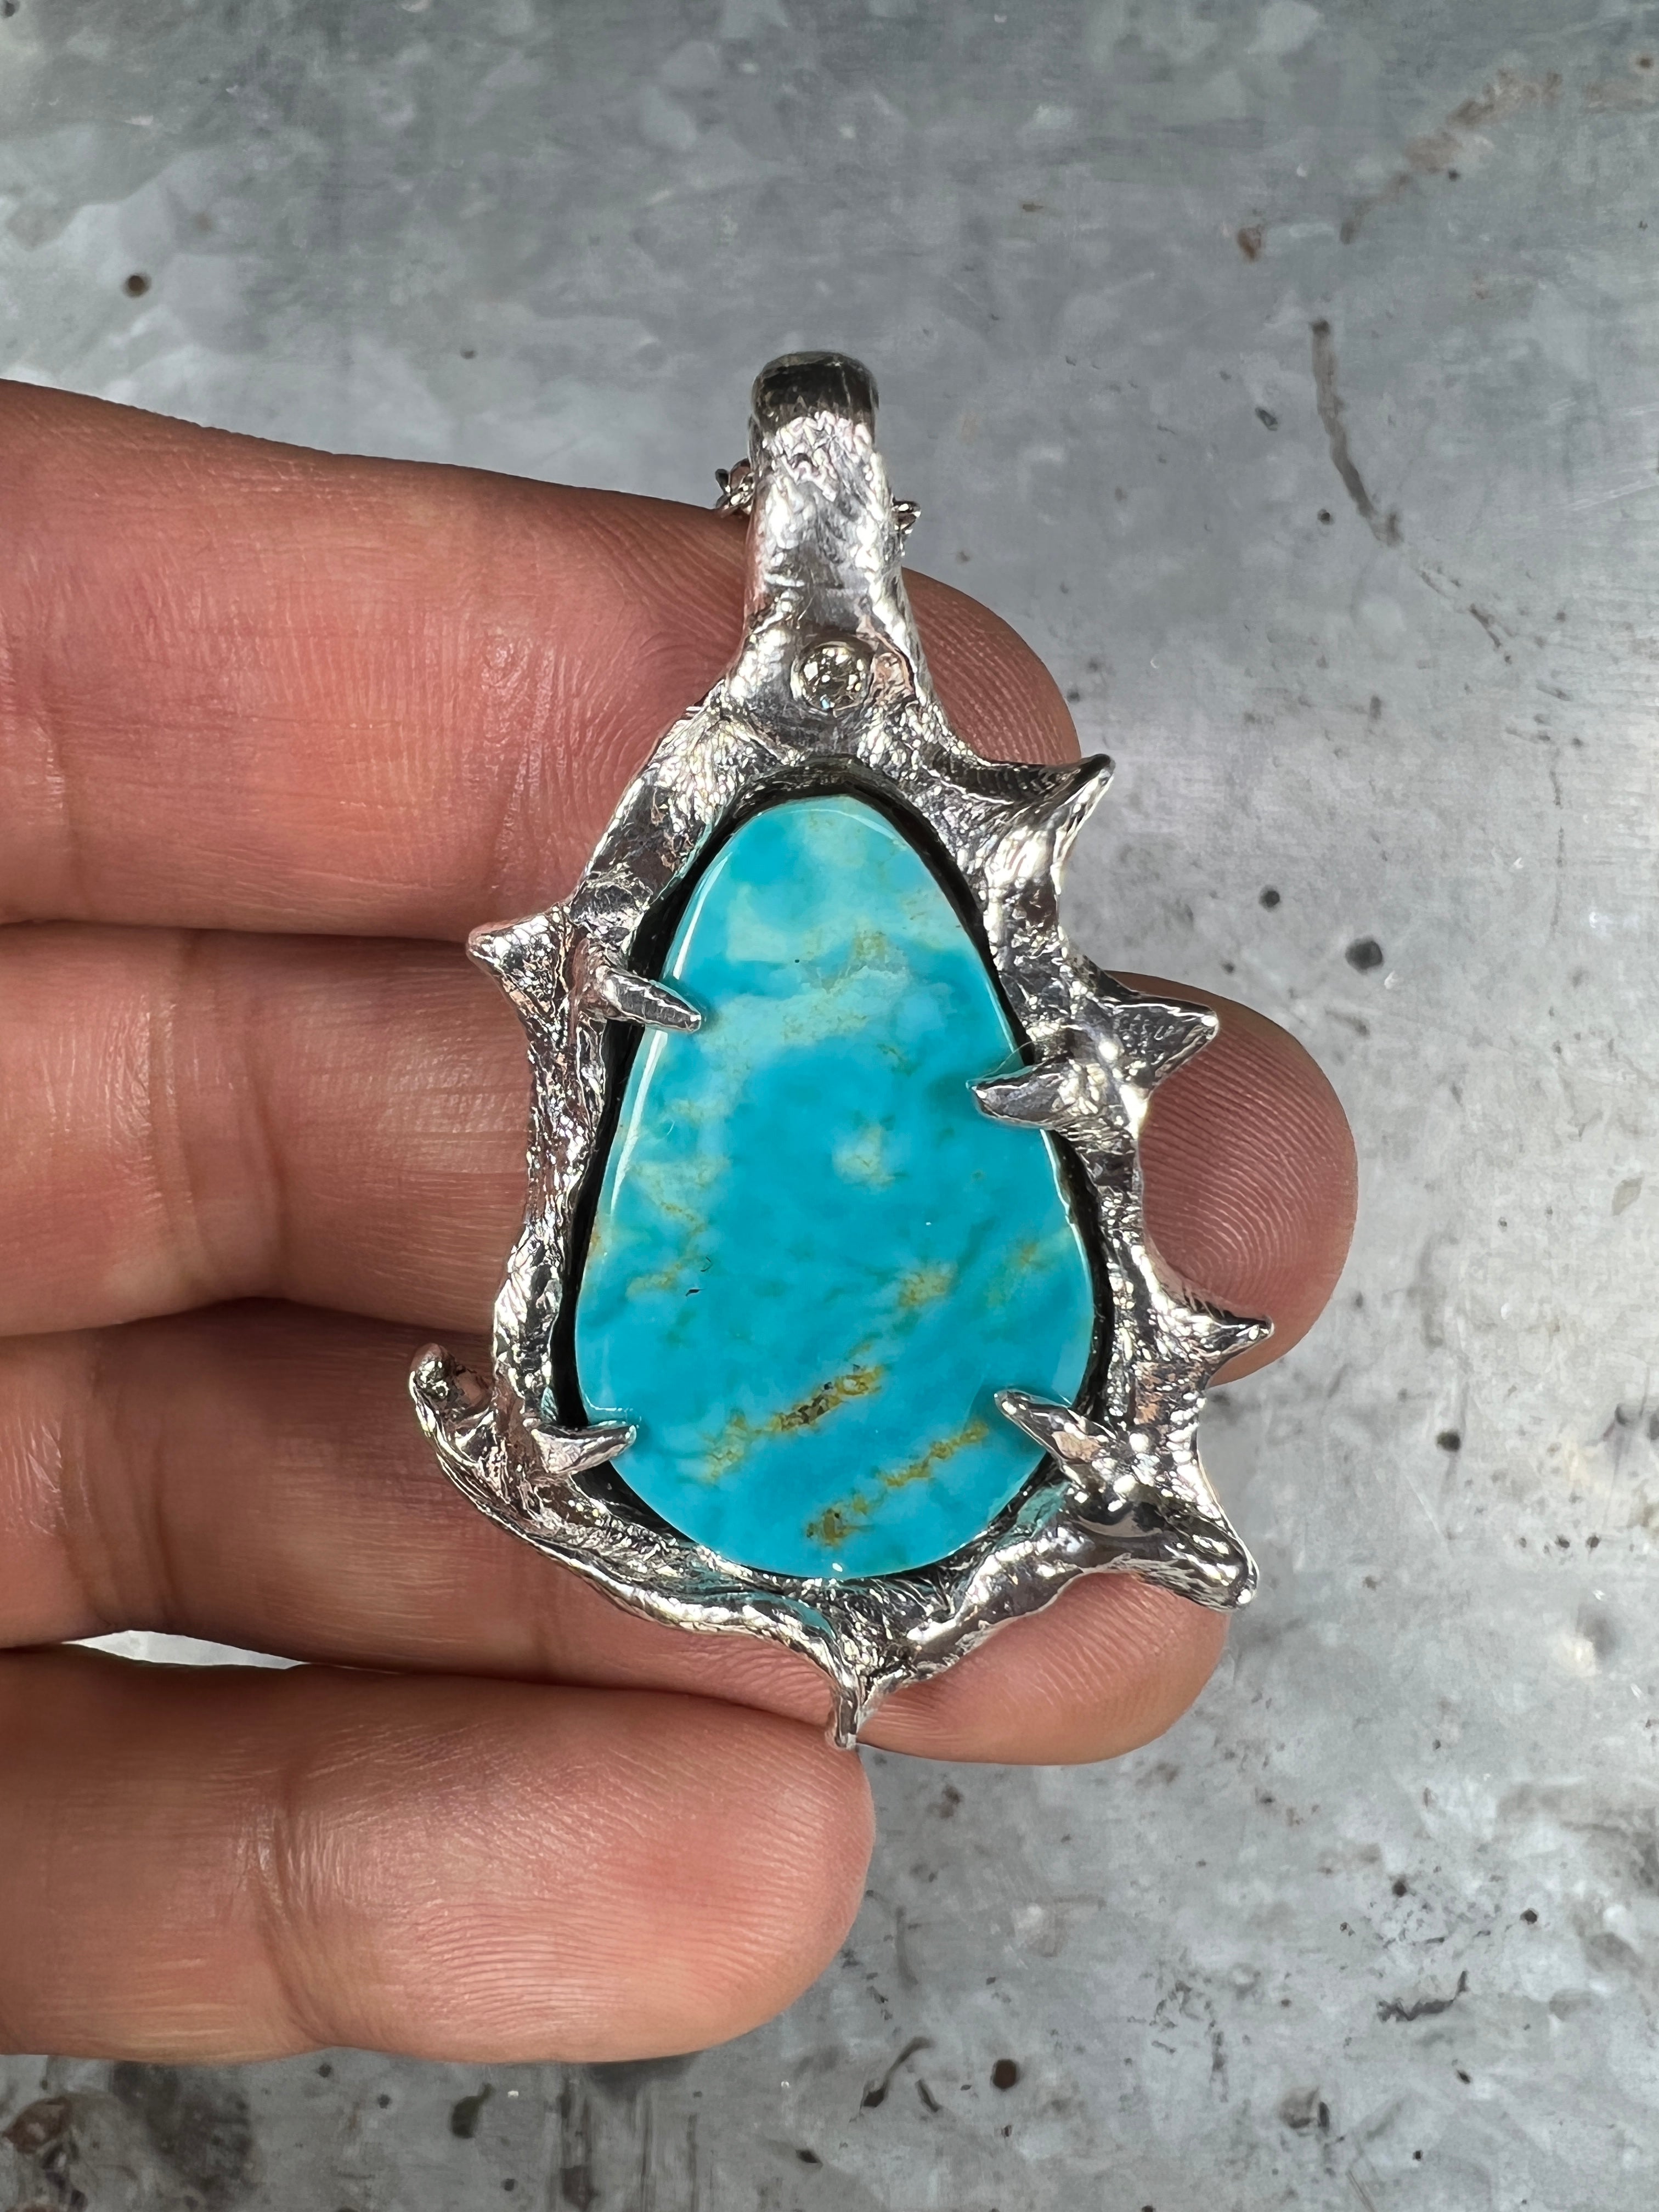 Star (Manassa Turquoise, Genuine Diamond, Sterling Silver Pendant)